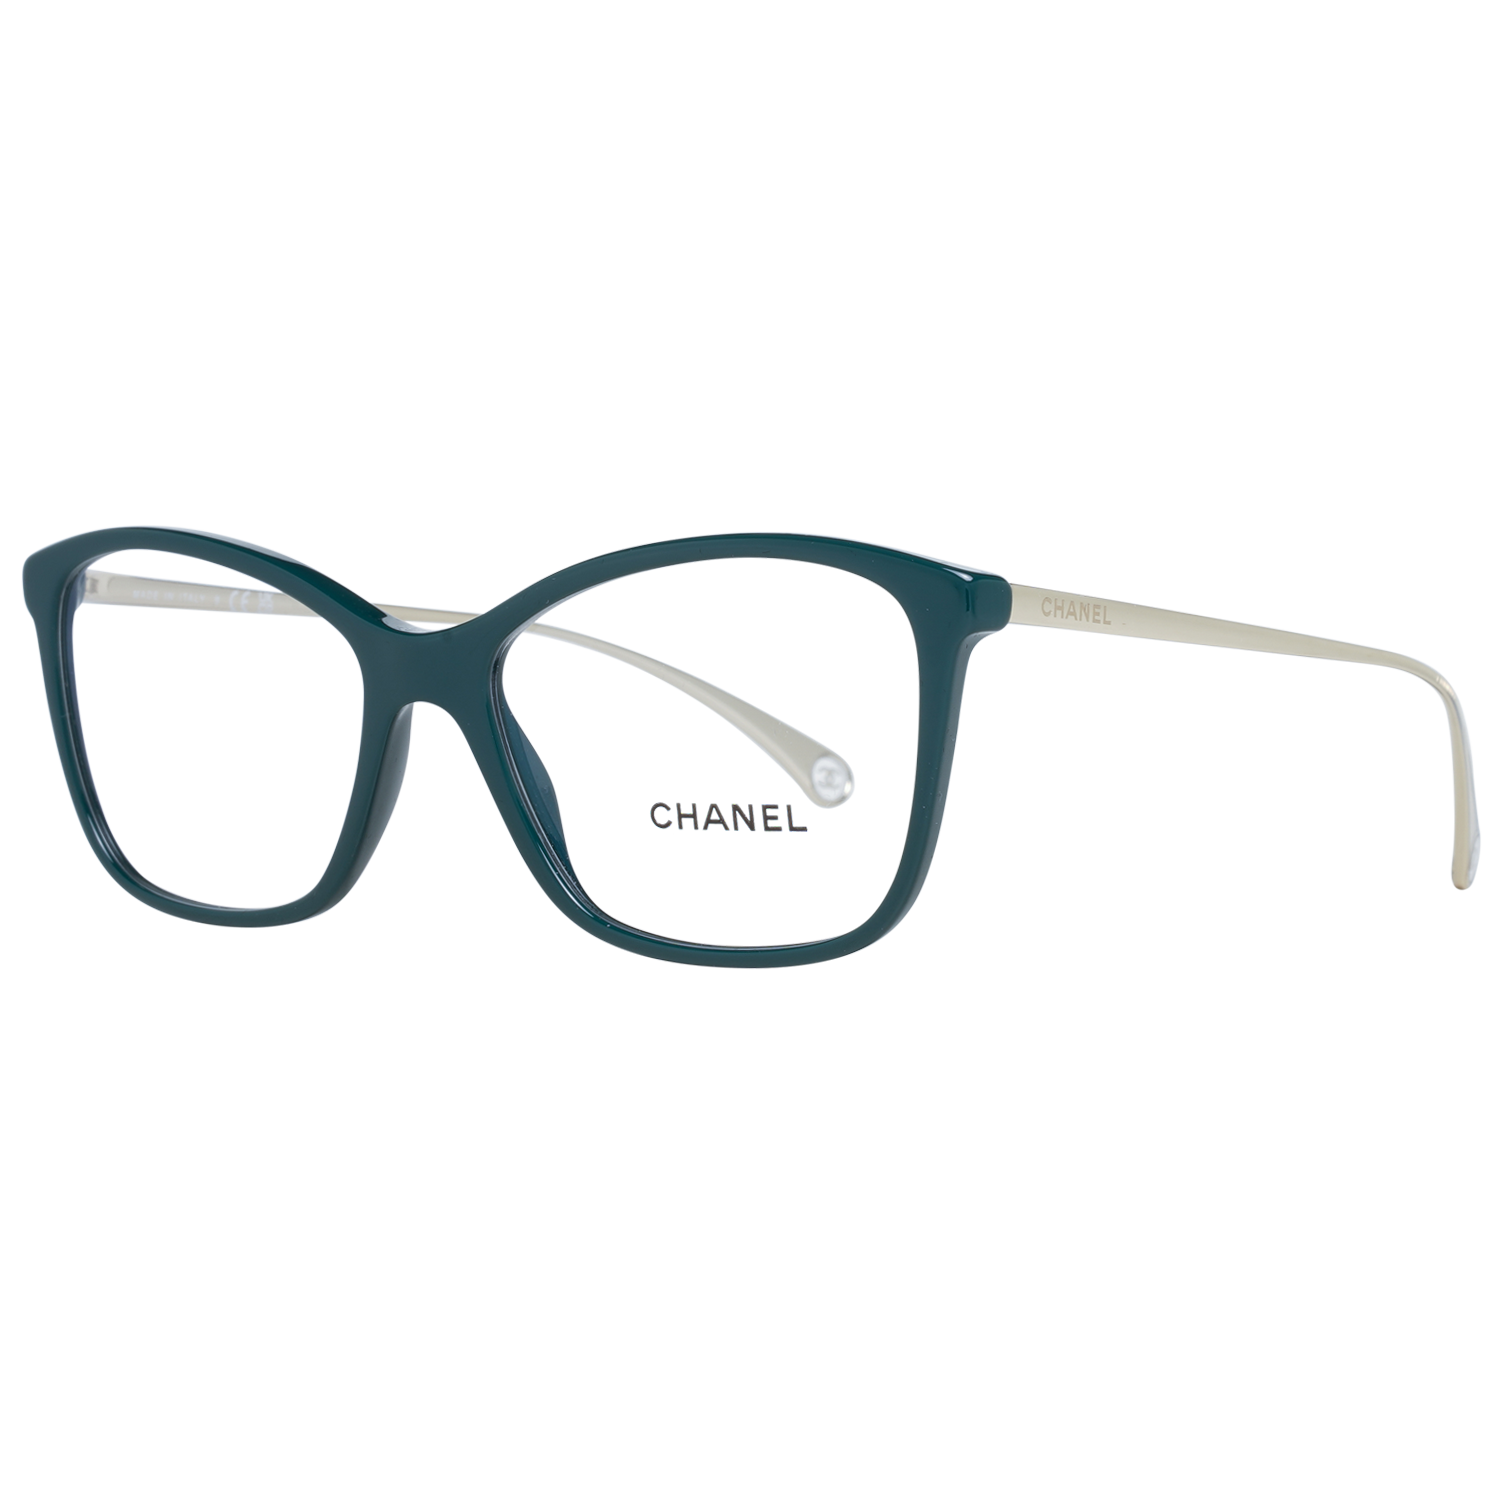 chanel eyeglasses frames